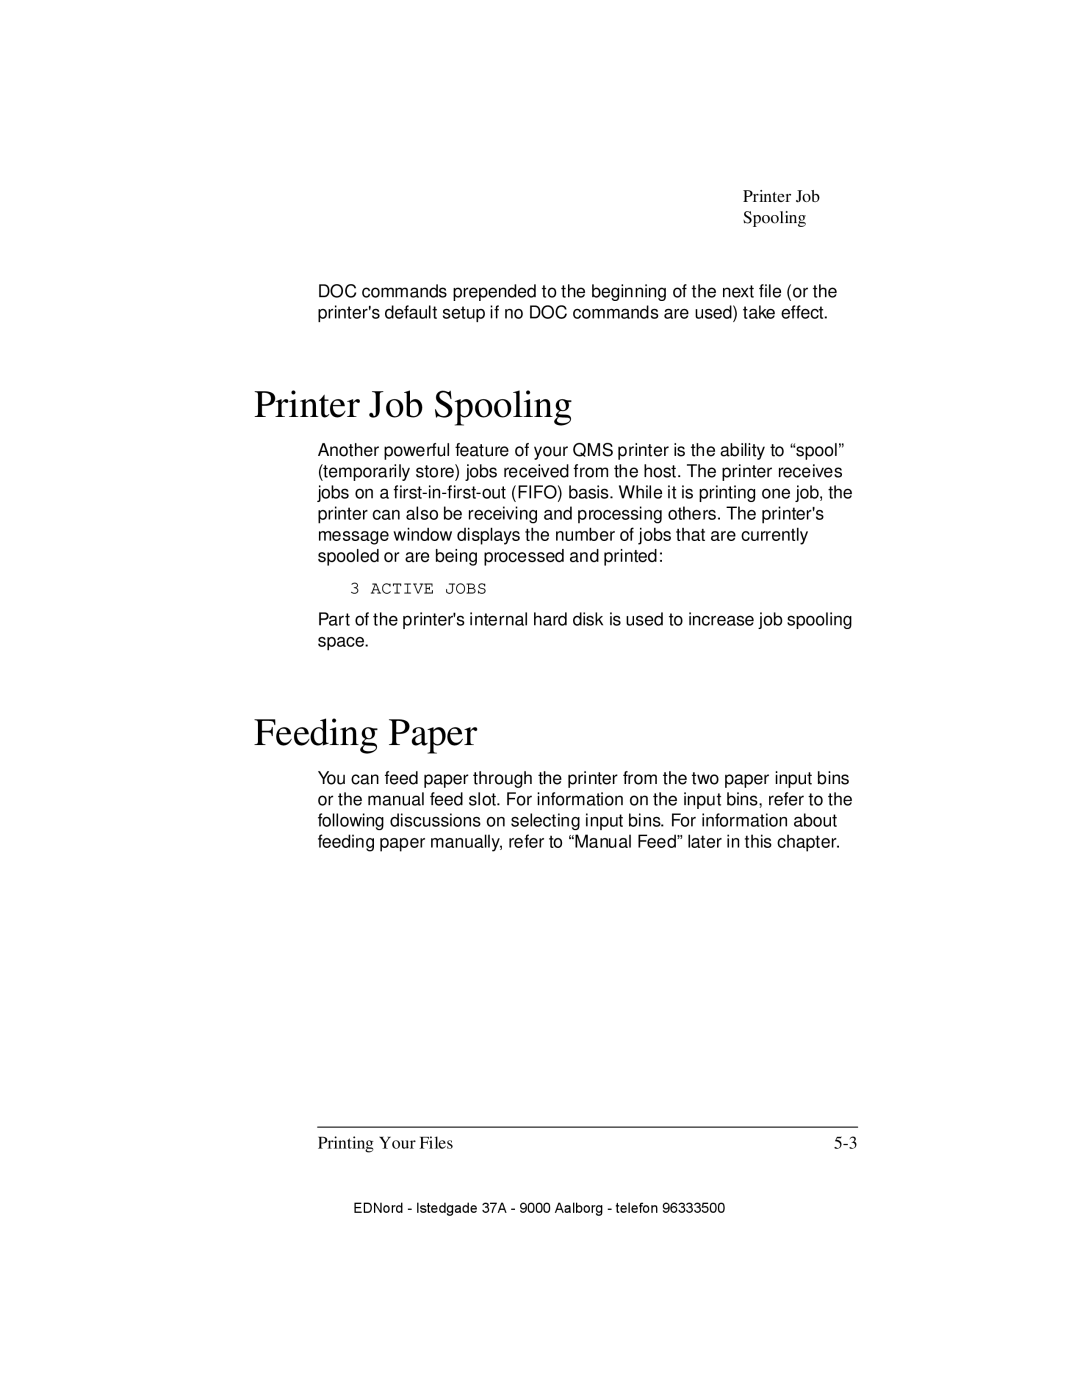 IBM QMS 4525 manual Printer Job Spooling, Feeding Paper, Printing Your Files 